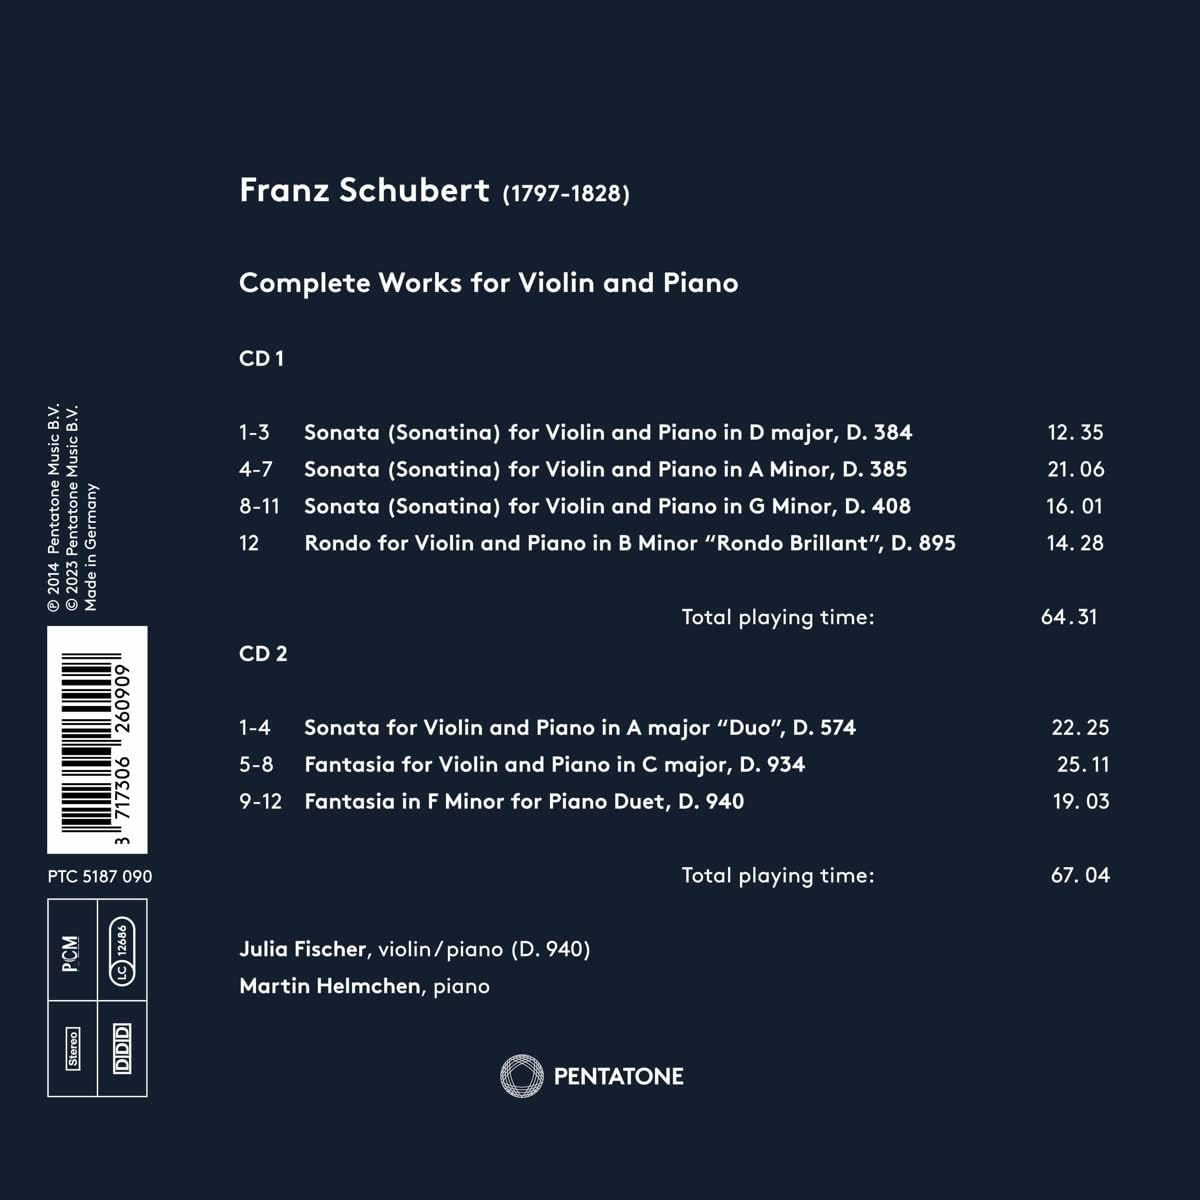 Julia Fischer / Martin Helmchen 슈베르트: 바이올린 소나타 전곡 (Schubert Complete Works For Violin and Piano)